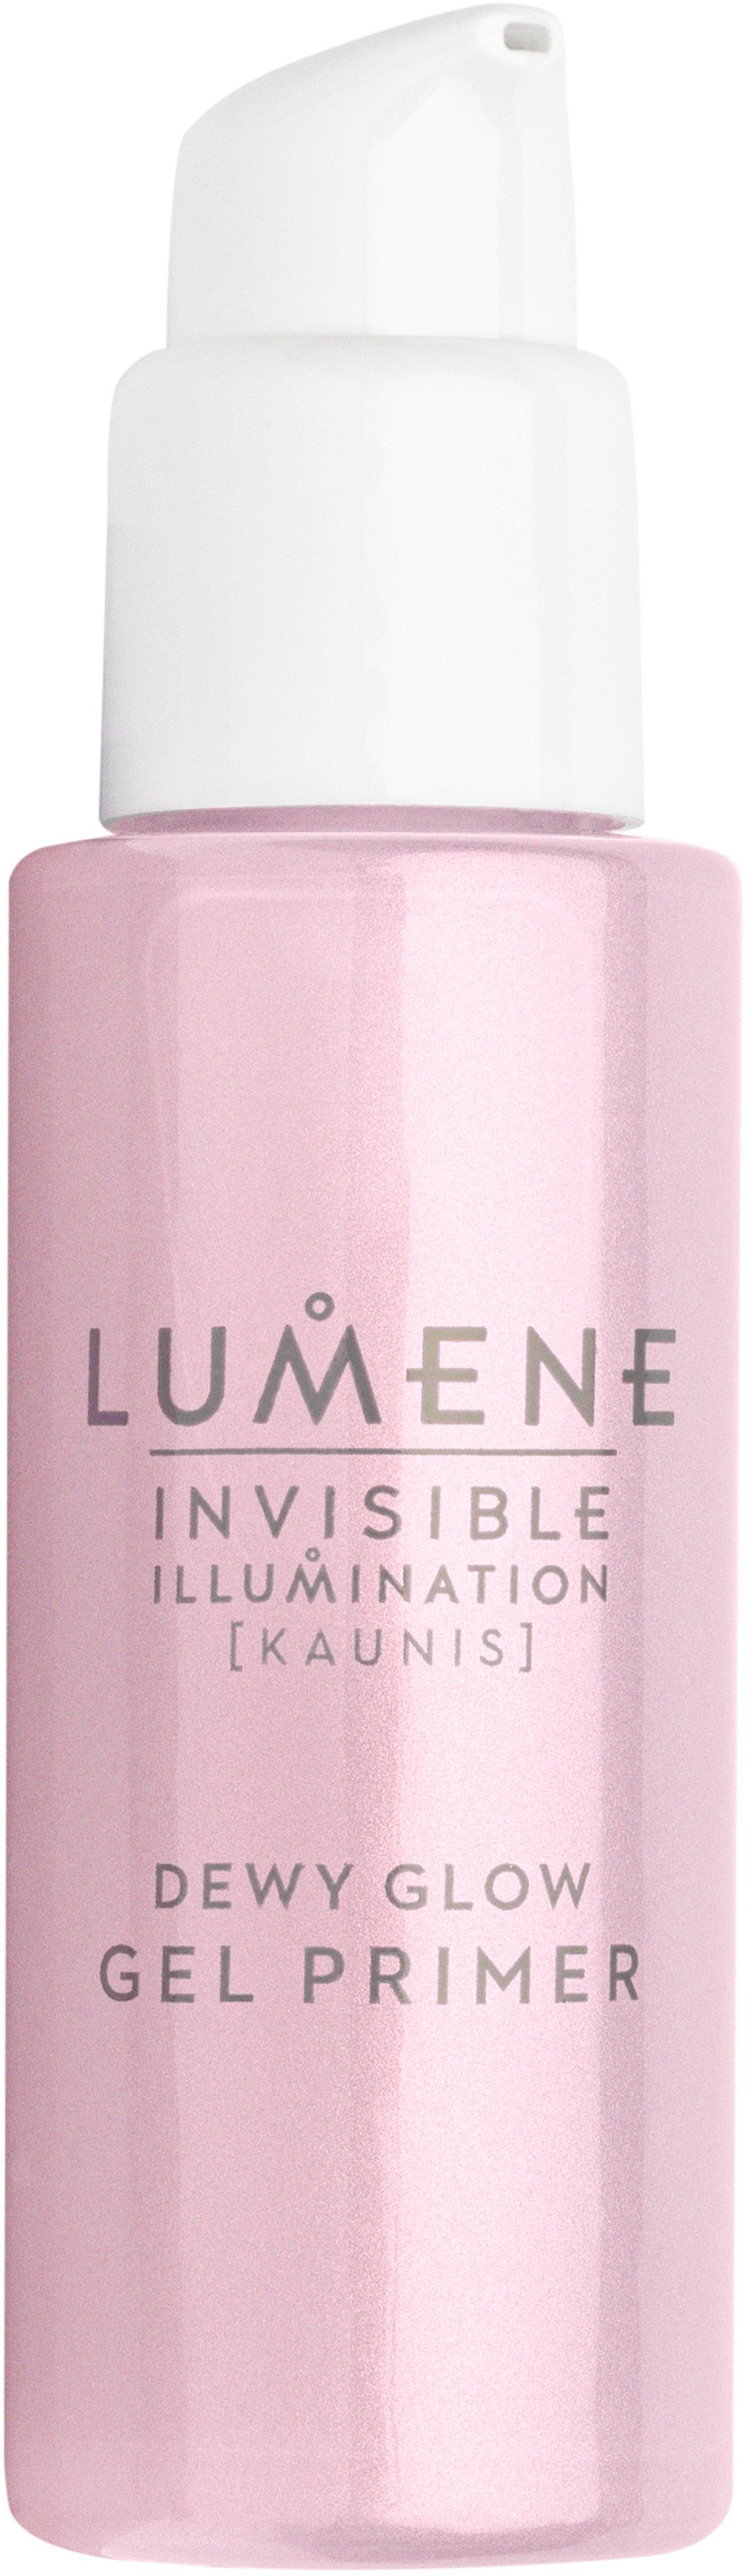 Lumene Invisible Illumination Dewy Glow Gel Primer 30 ml